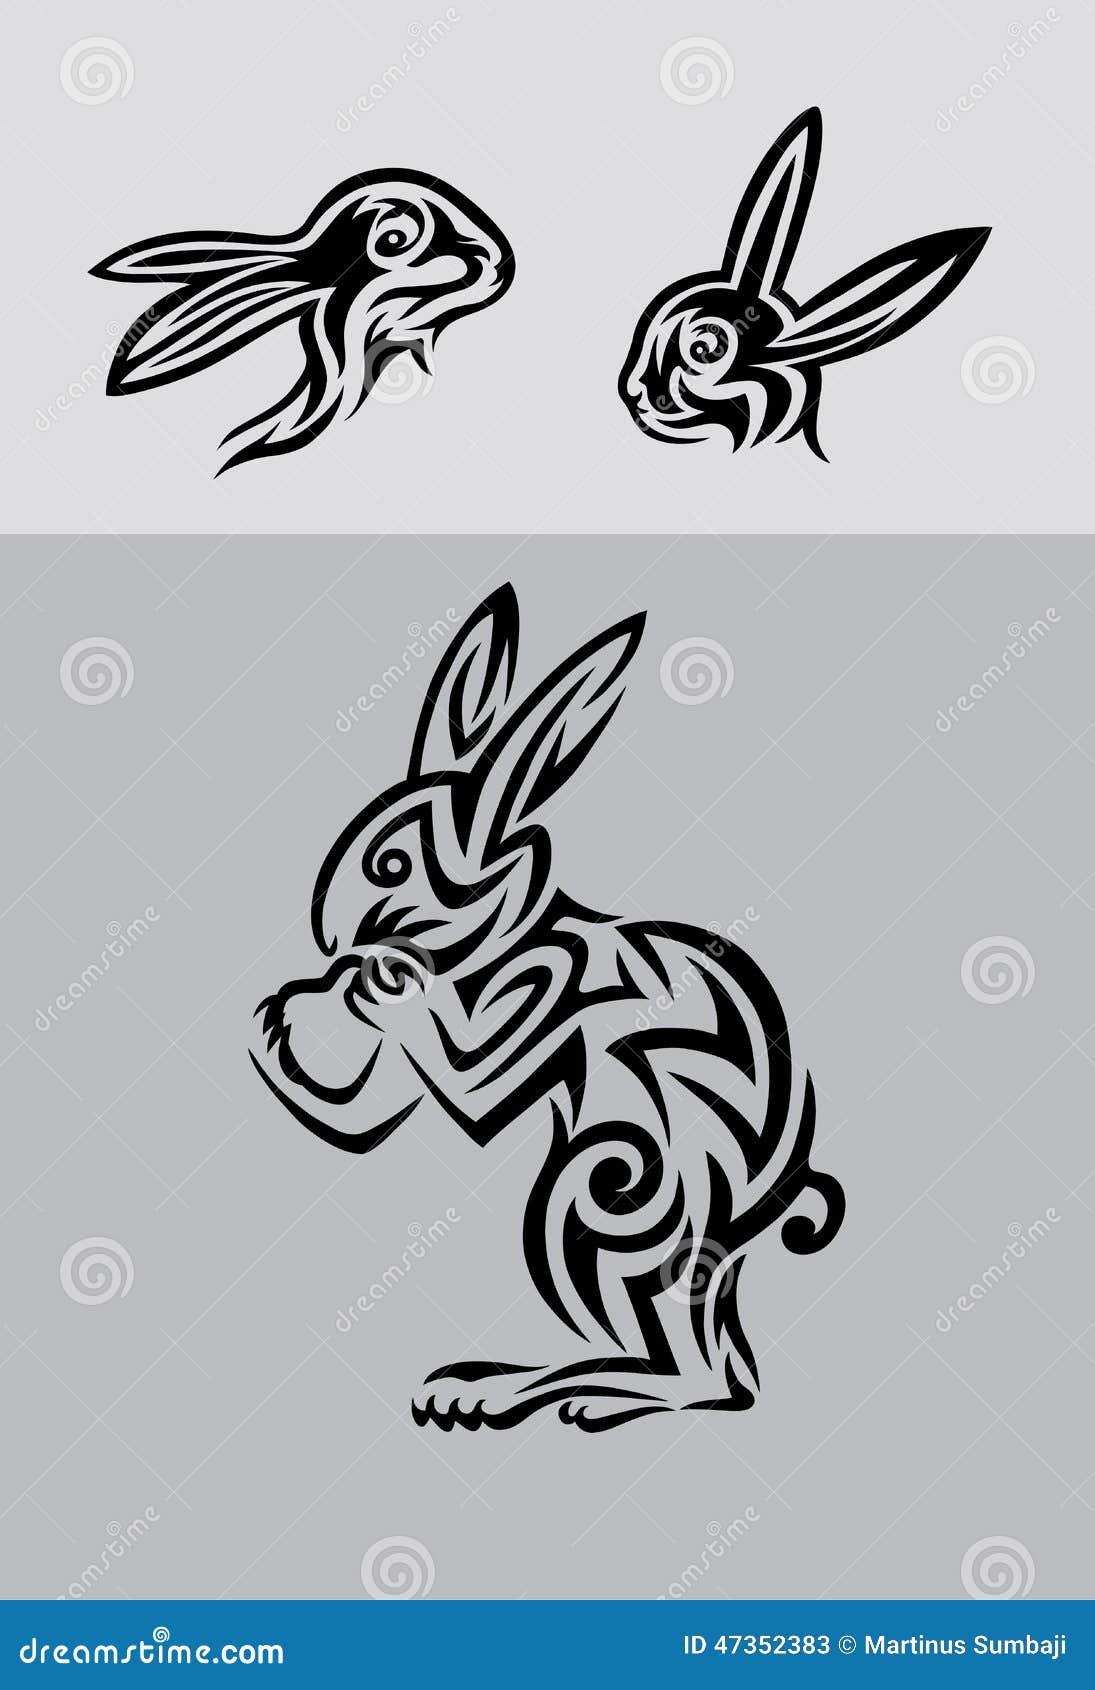 Spiritual Tattoo Ideas & Their Meanings | Mad Rabbit Tattoo